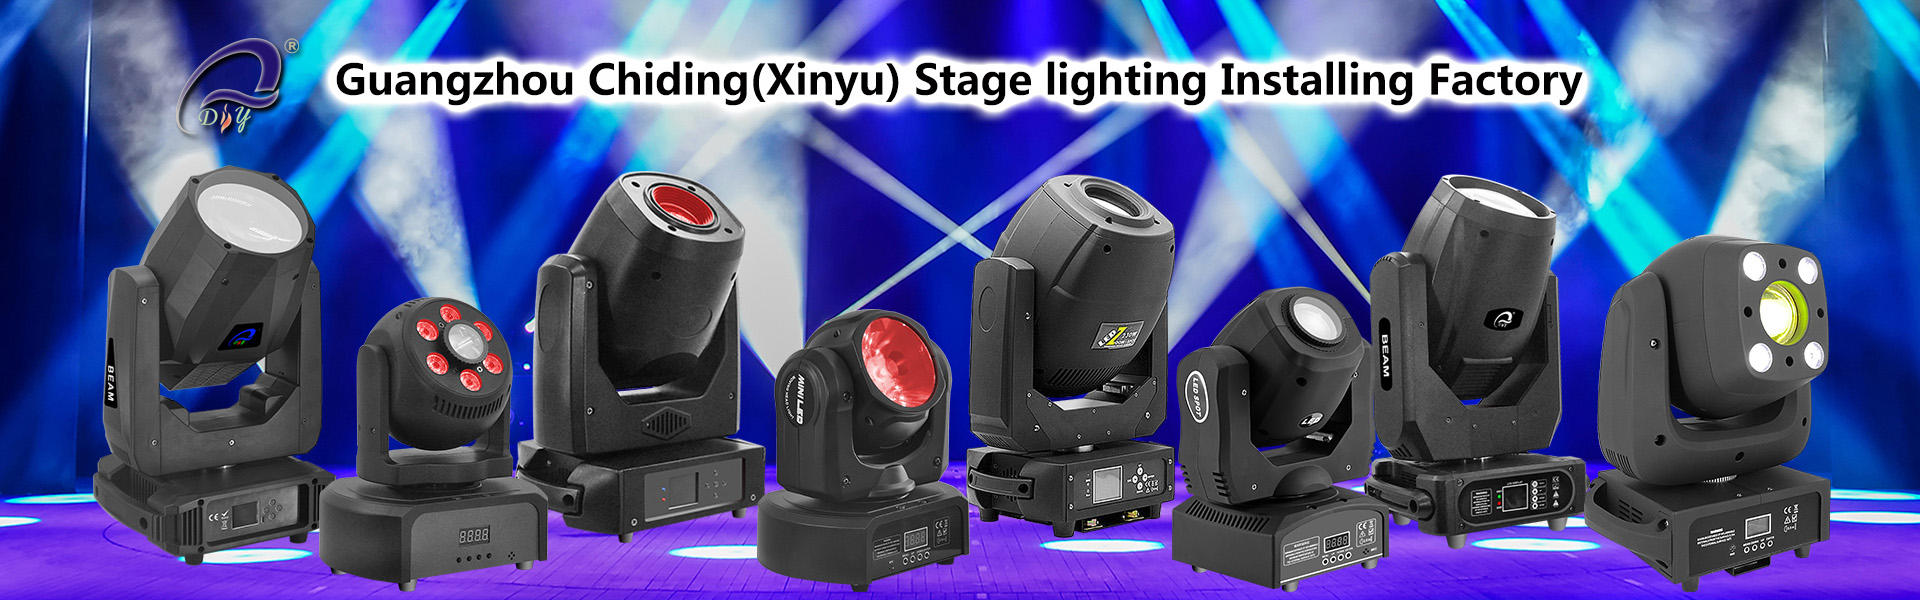 Faoi stiúir, 照明 ム ー,guangzhou chiding stage lighting co ltd